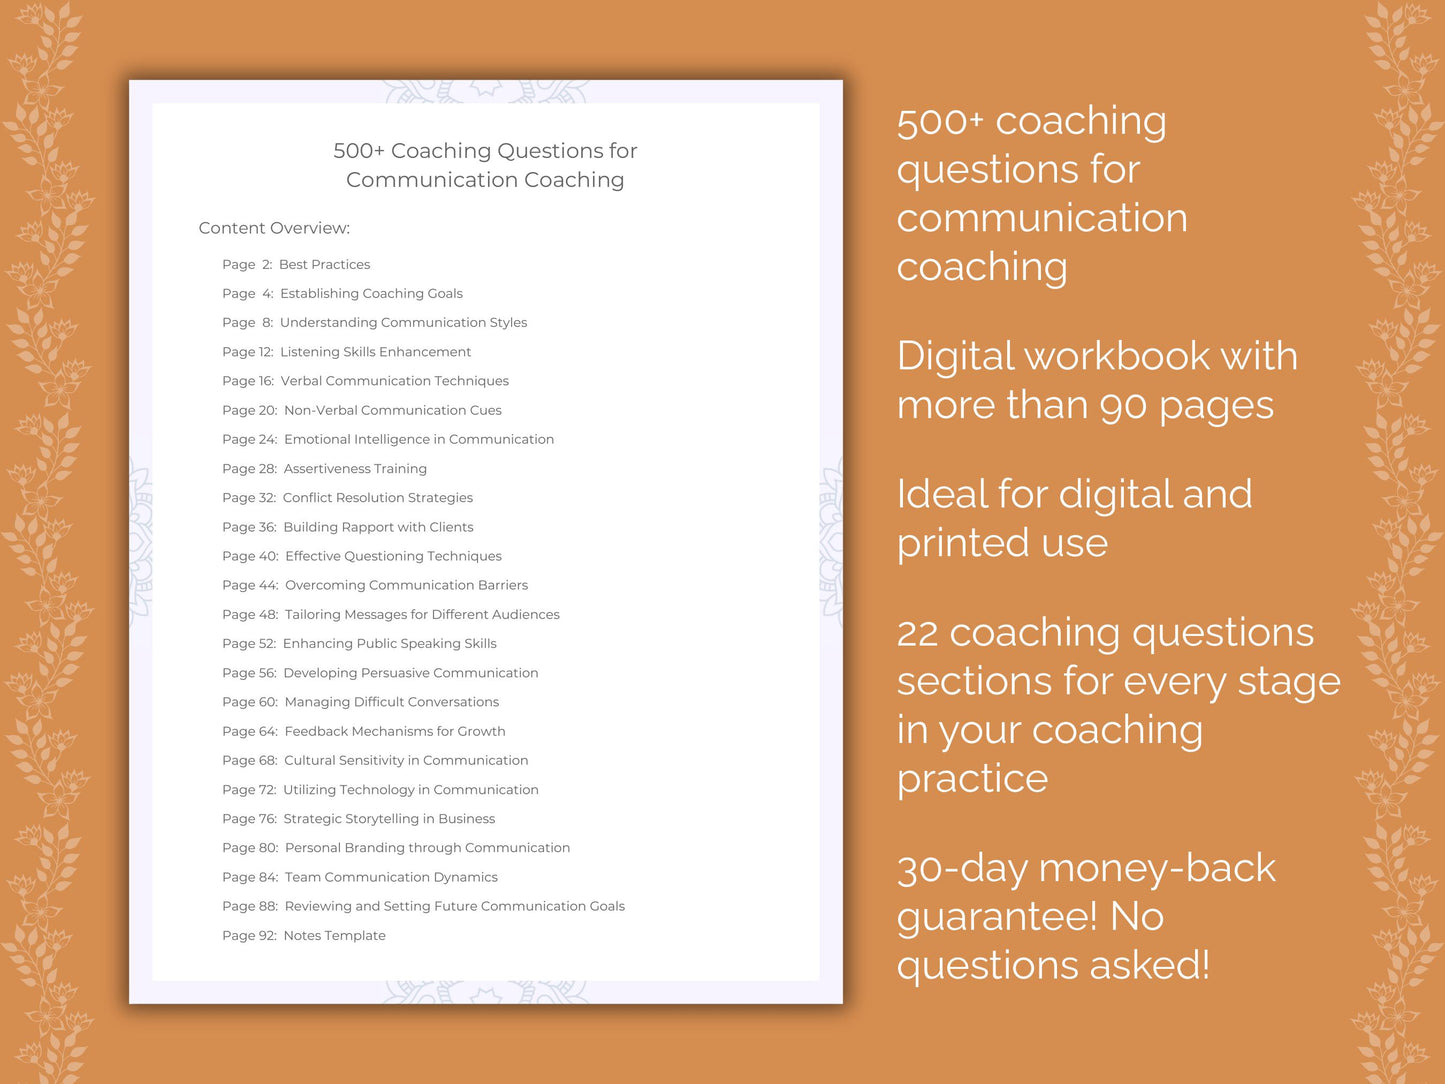 Coaching Workbook